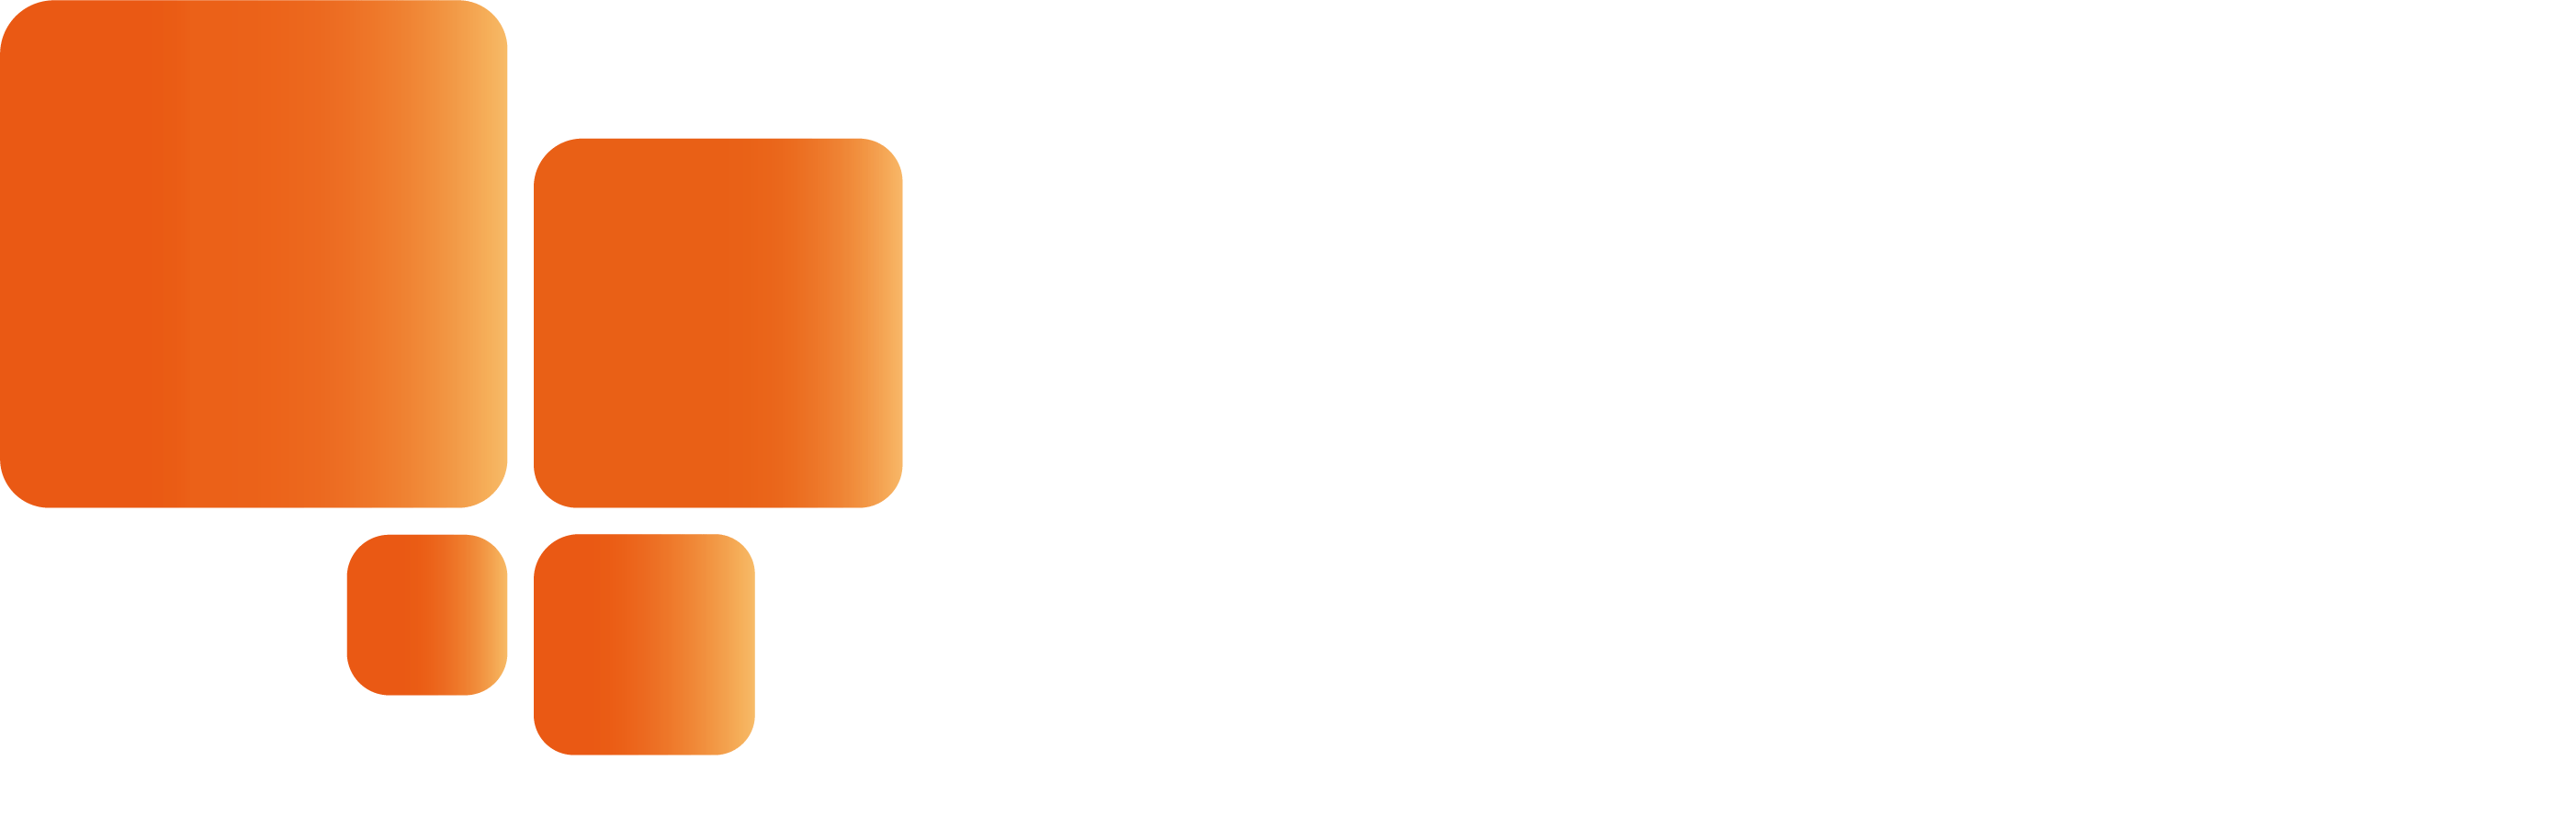 Adventio Marketing logo